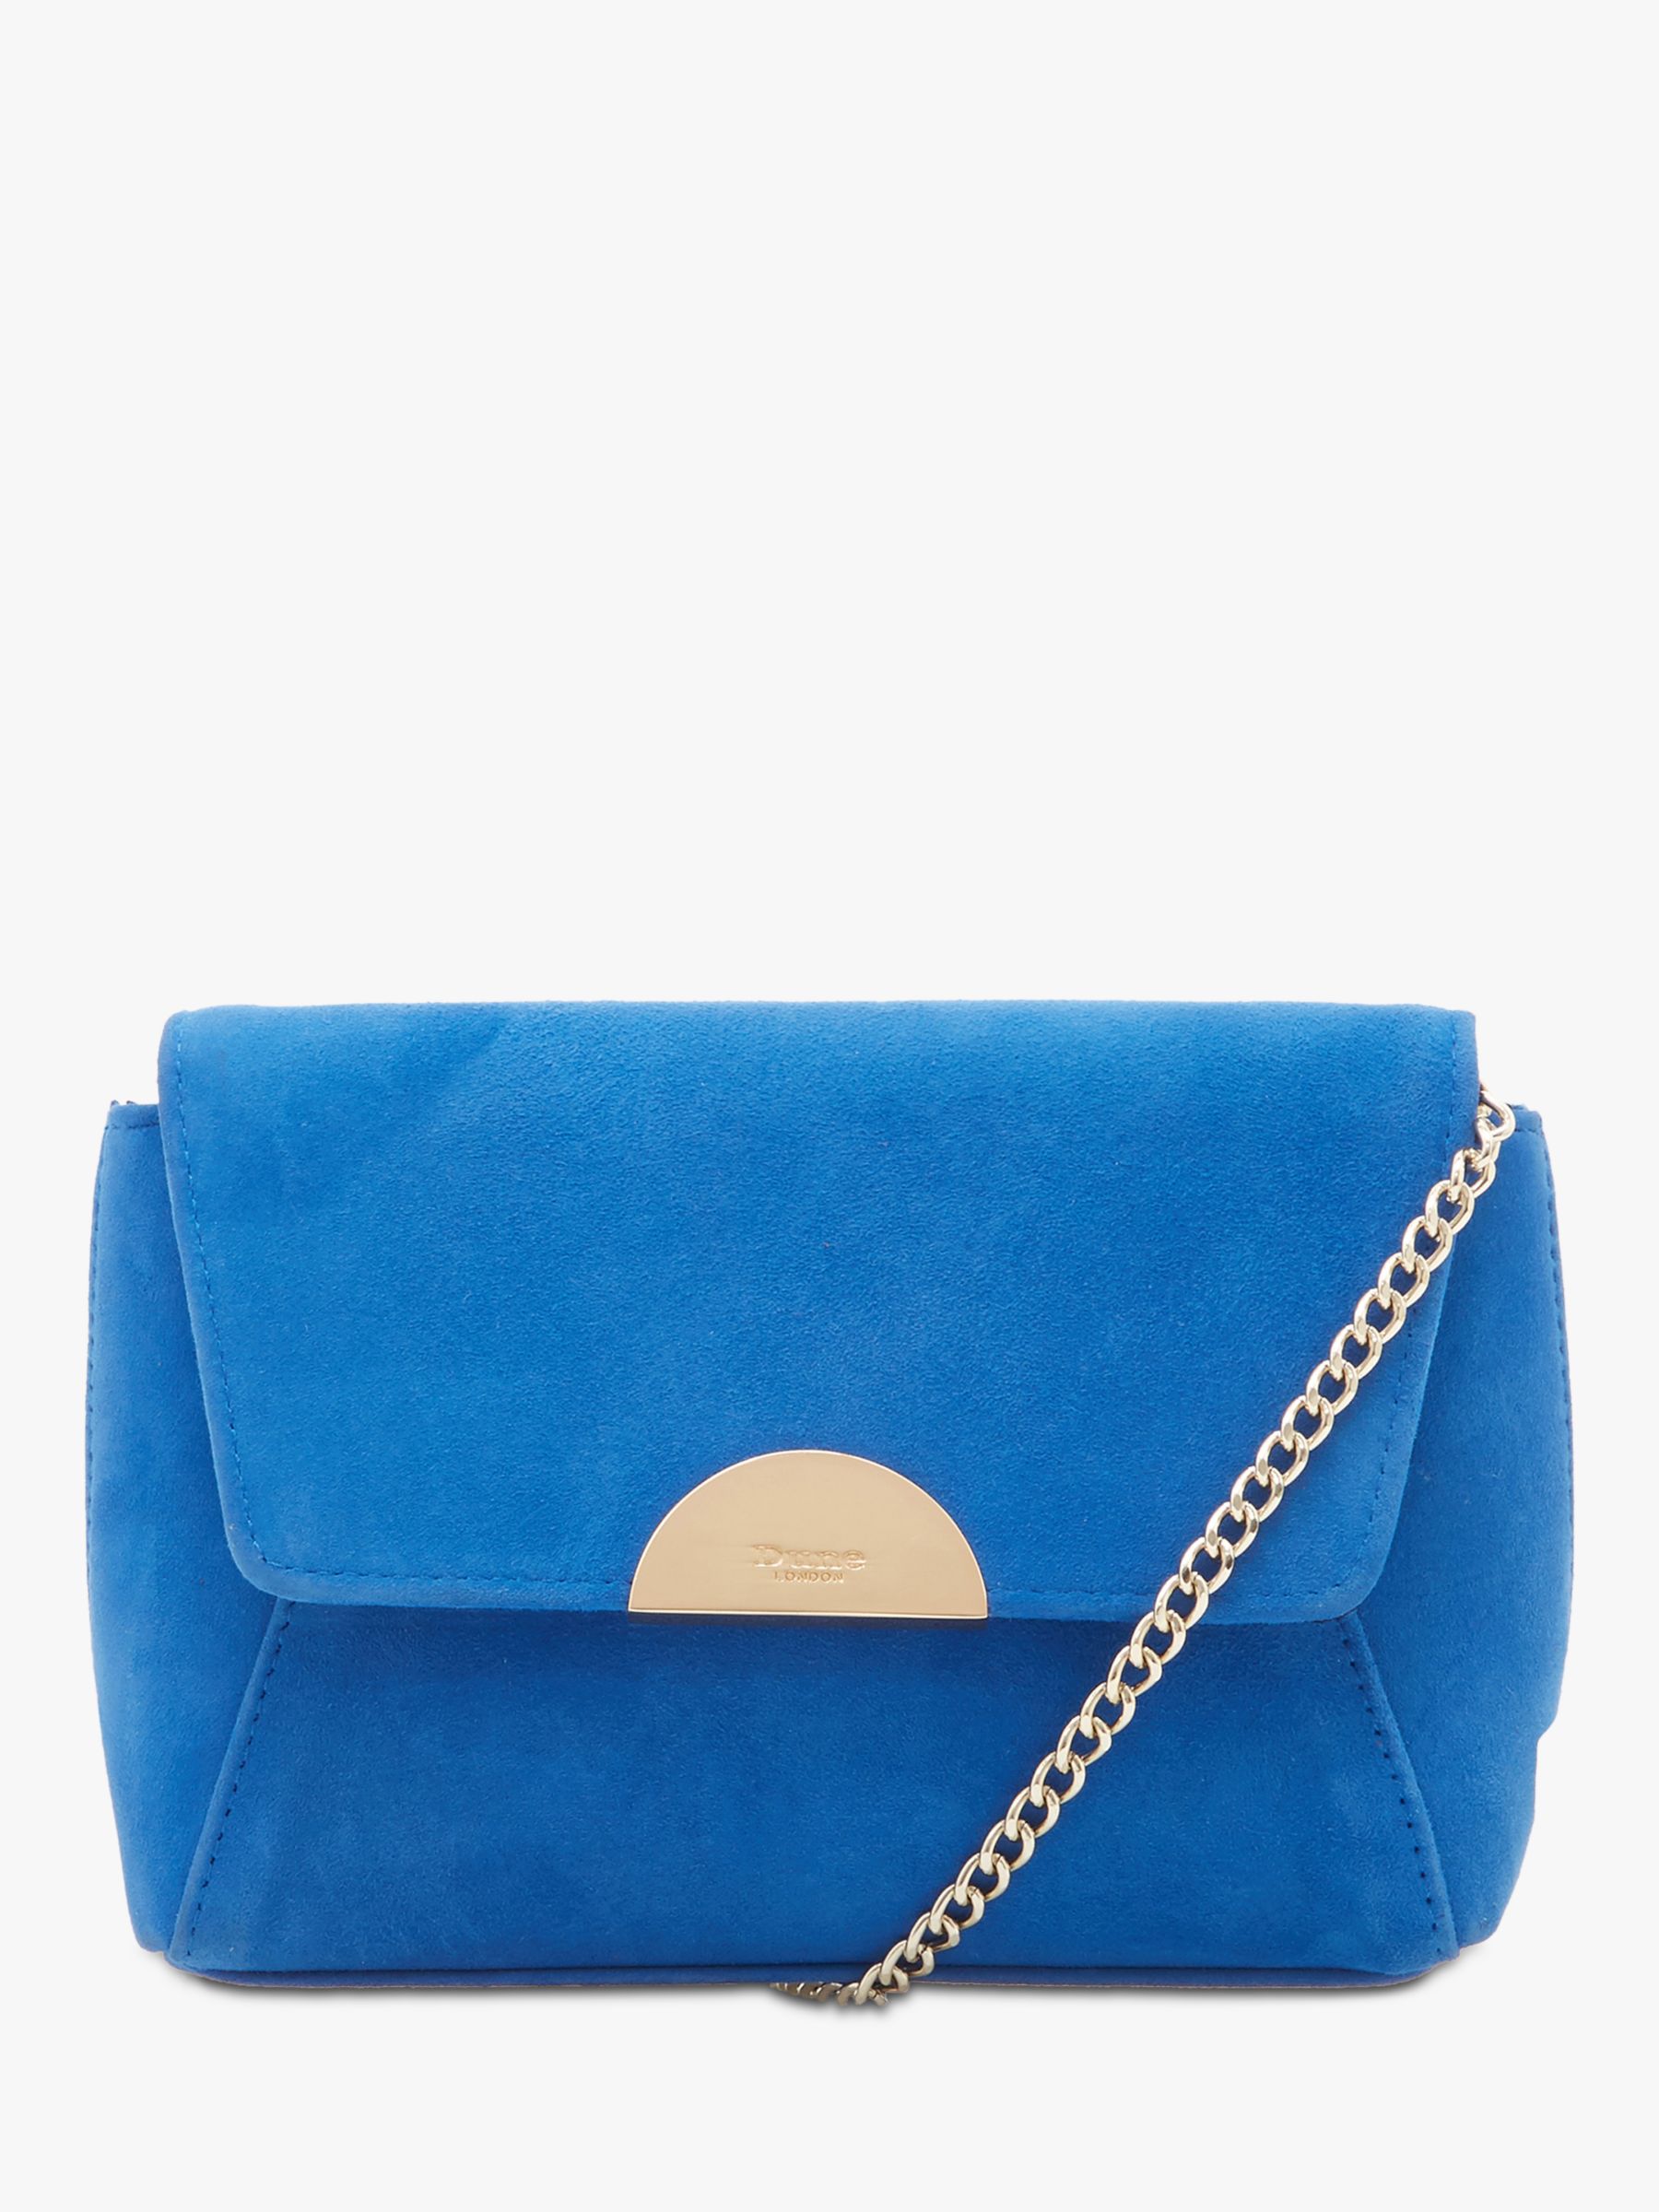 dune blue clutch bag